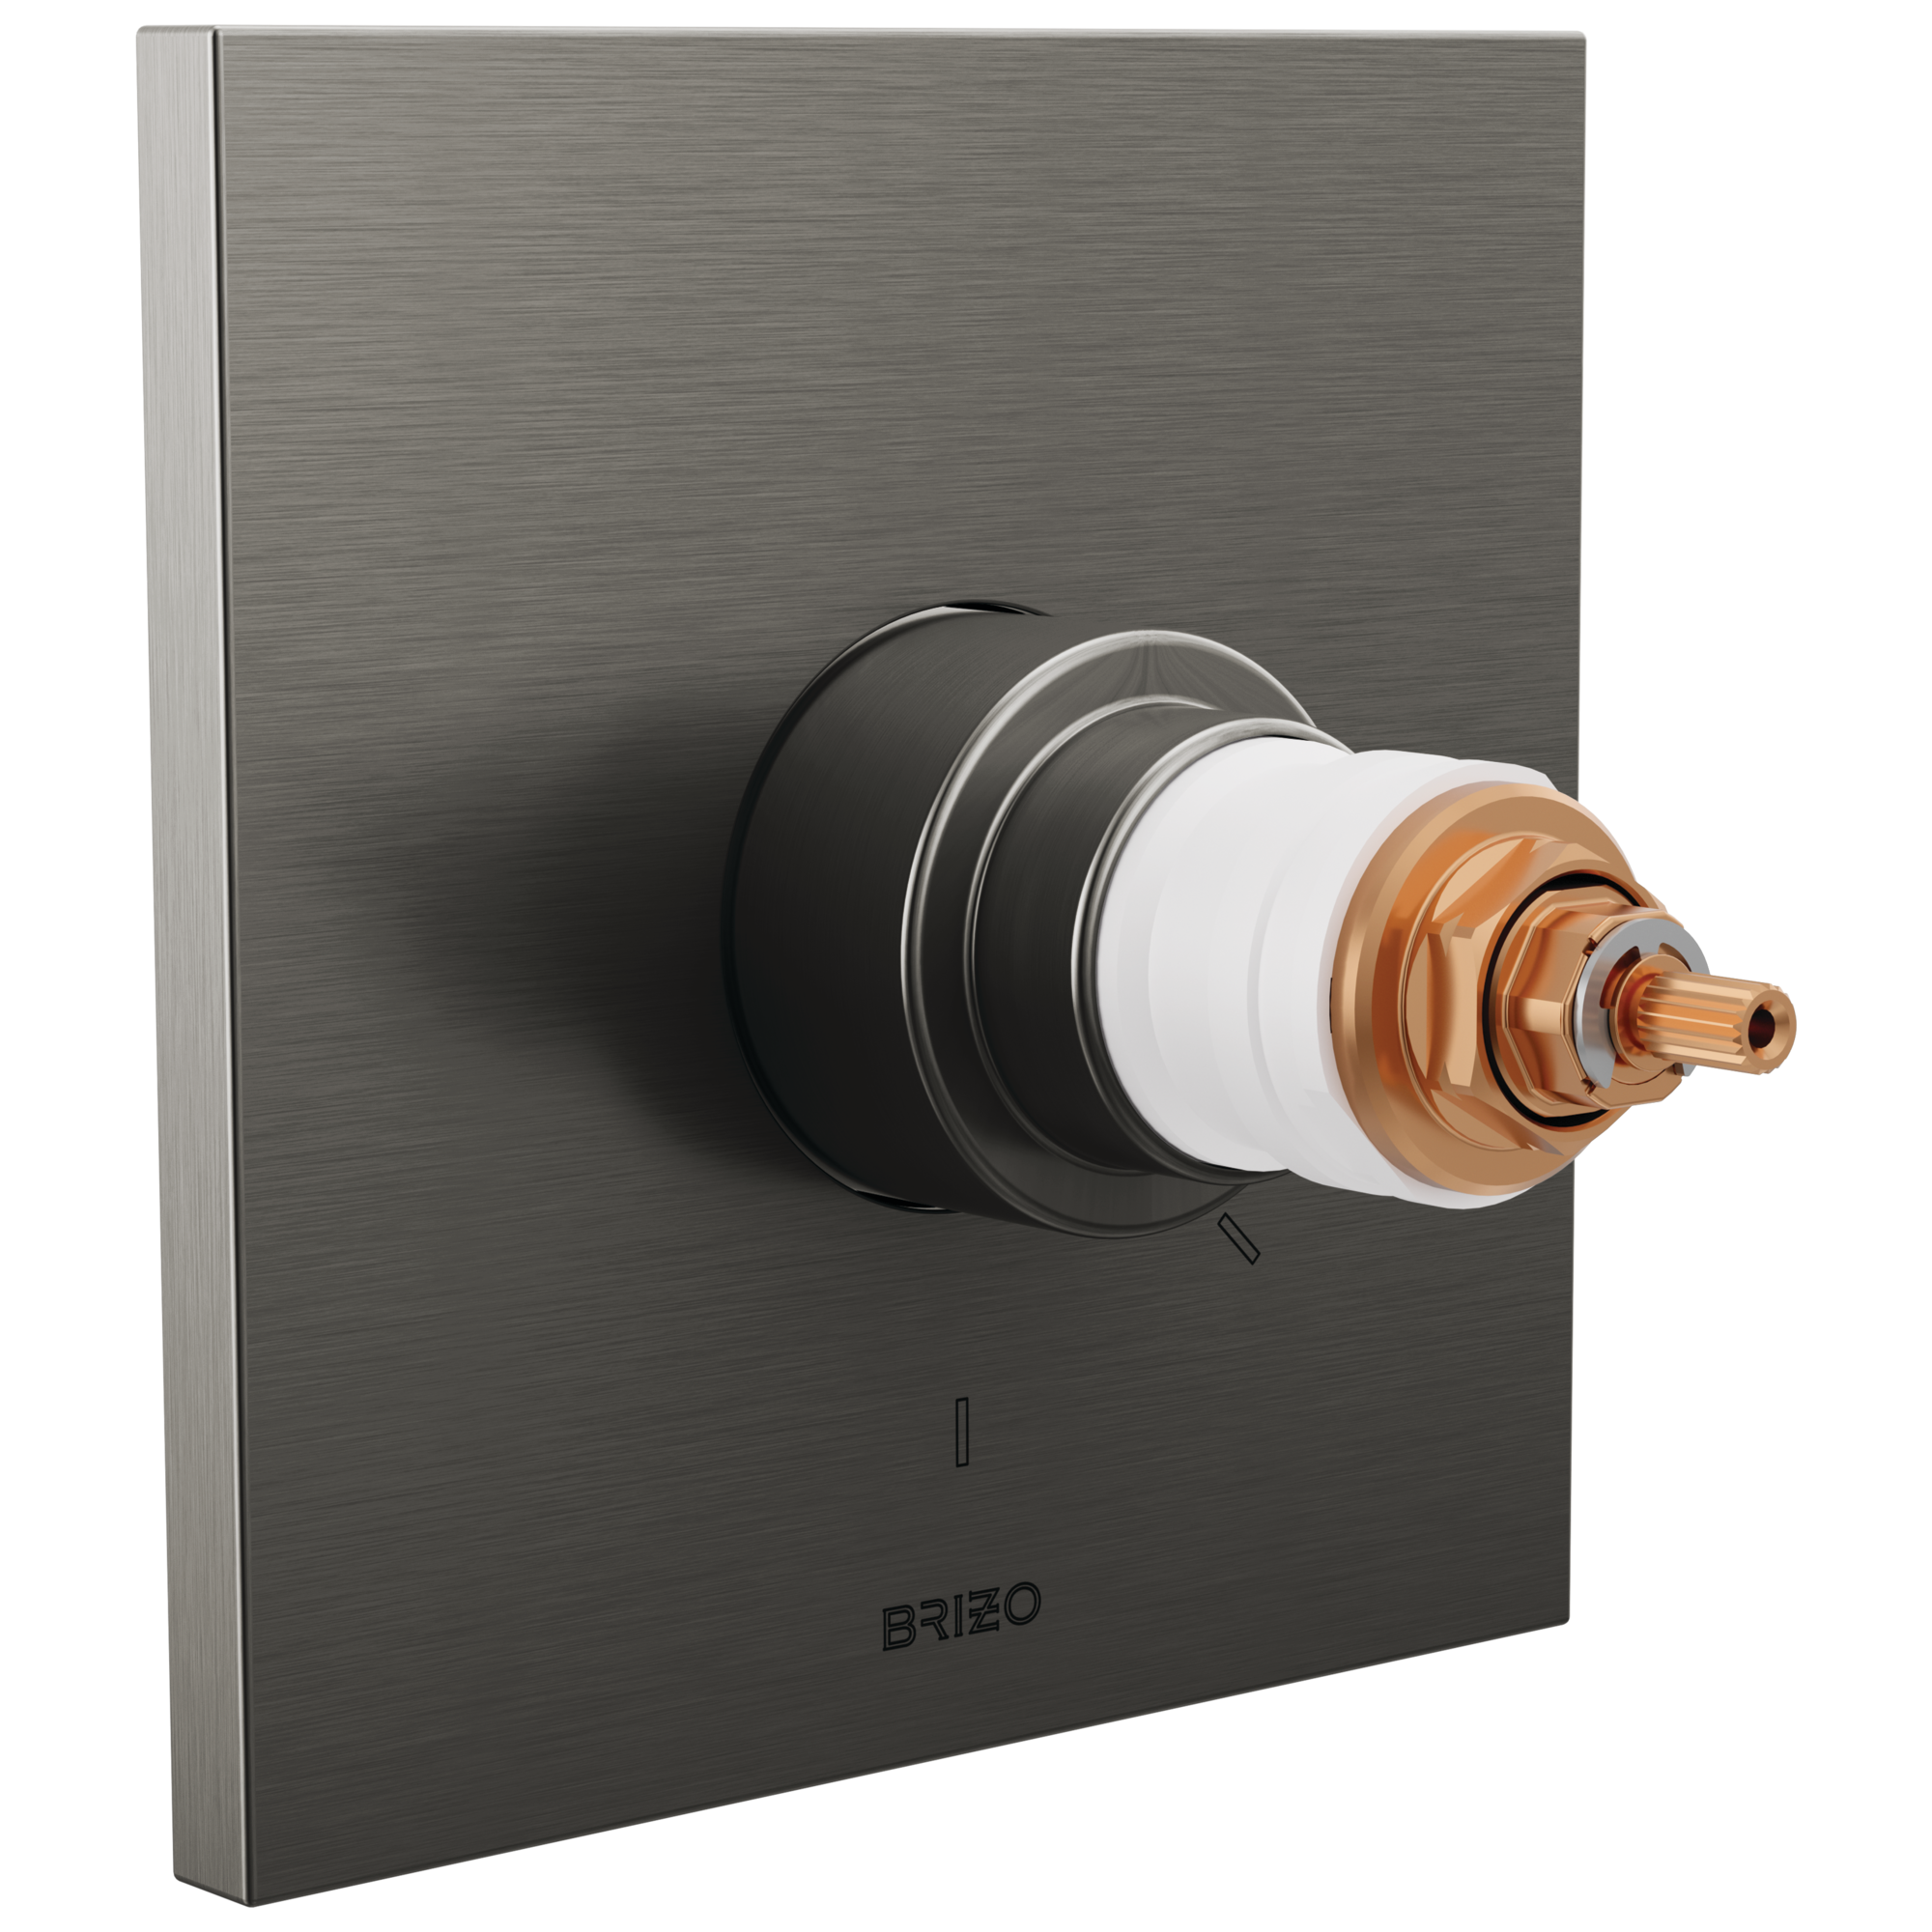 Brizo Frank Lloyd Wright TempAssure Thermostatic Valve Only Trim - Less Handles